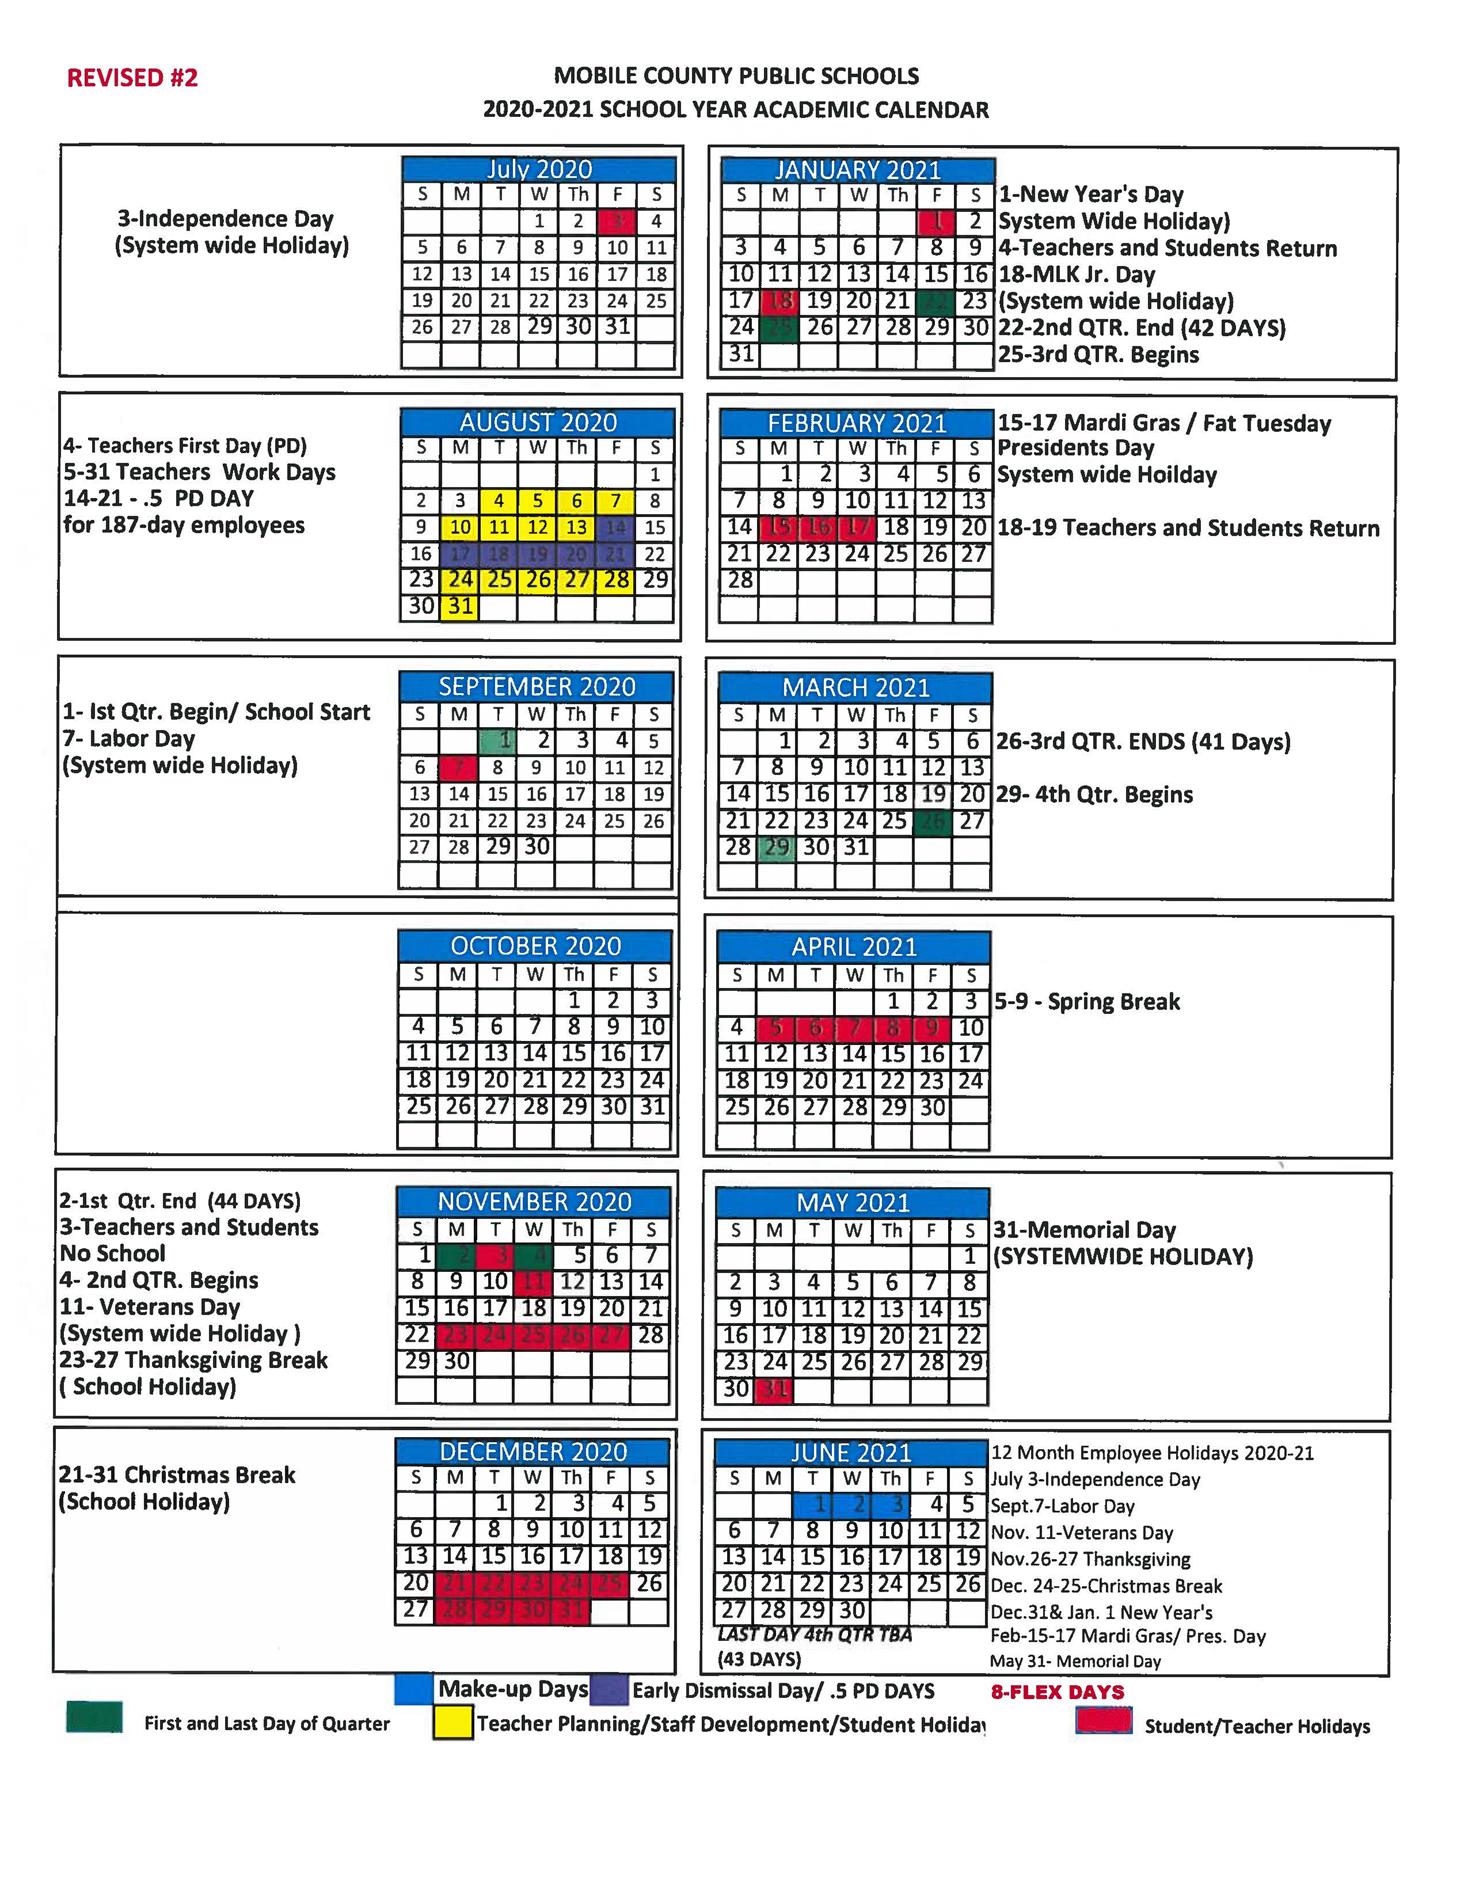 2020-2021 school calendar